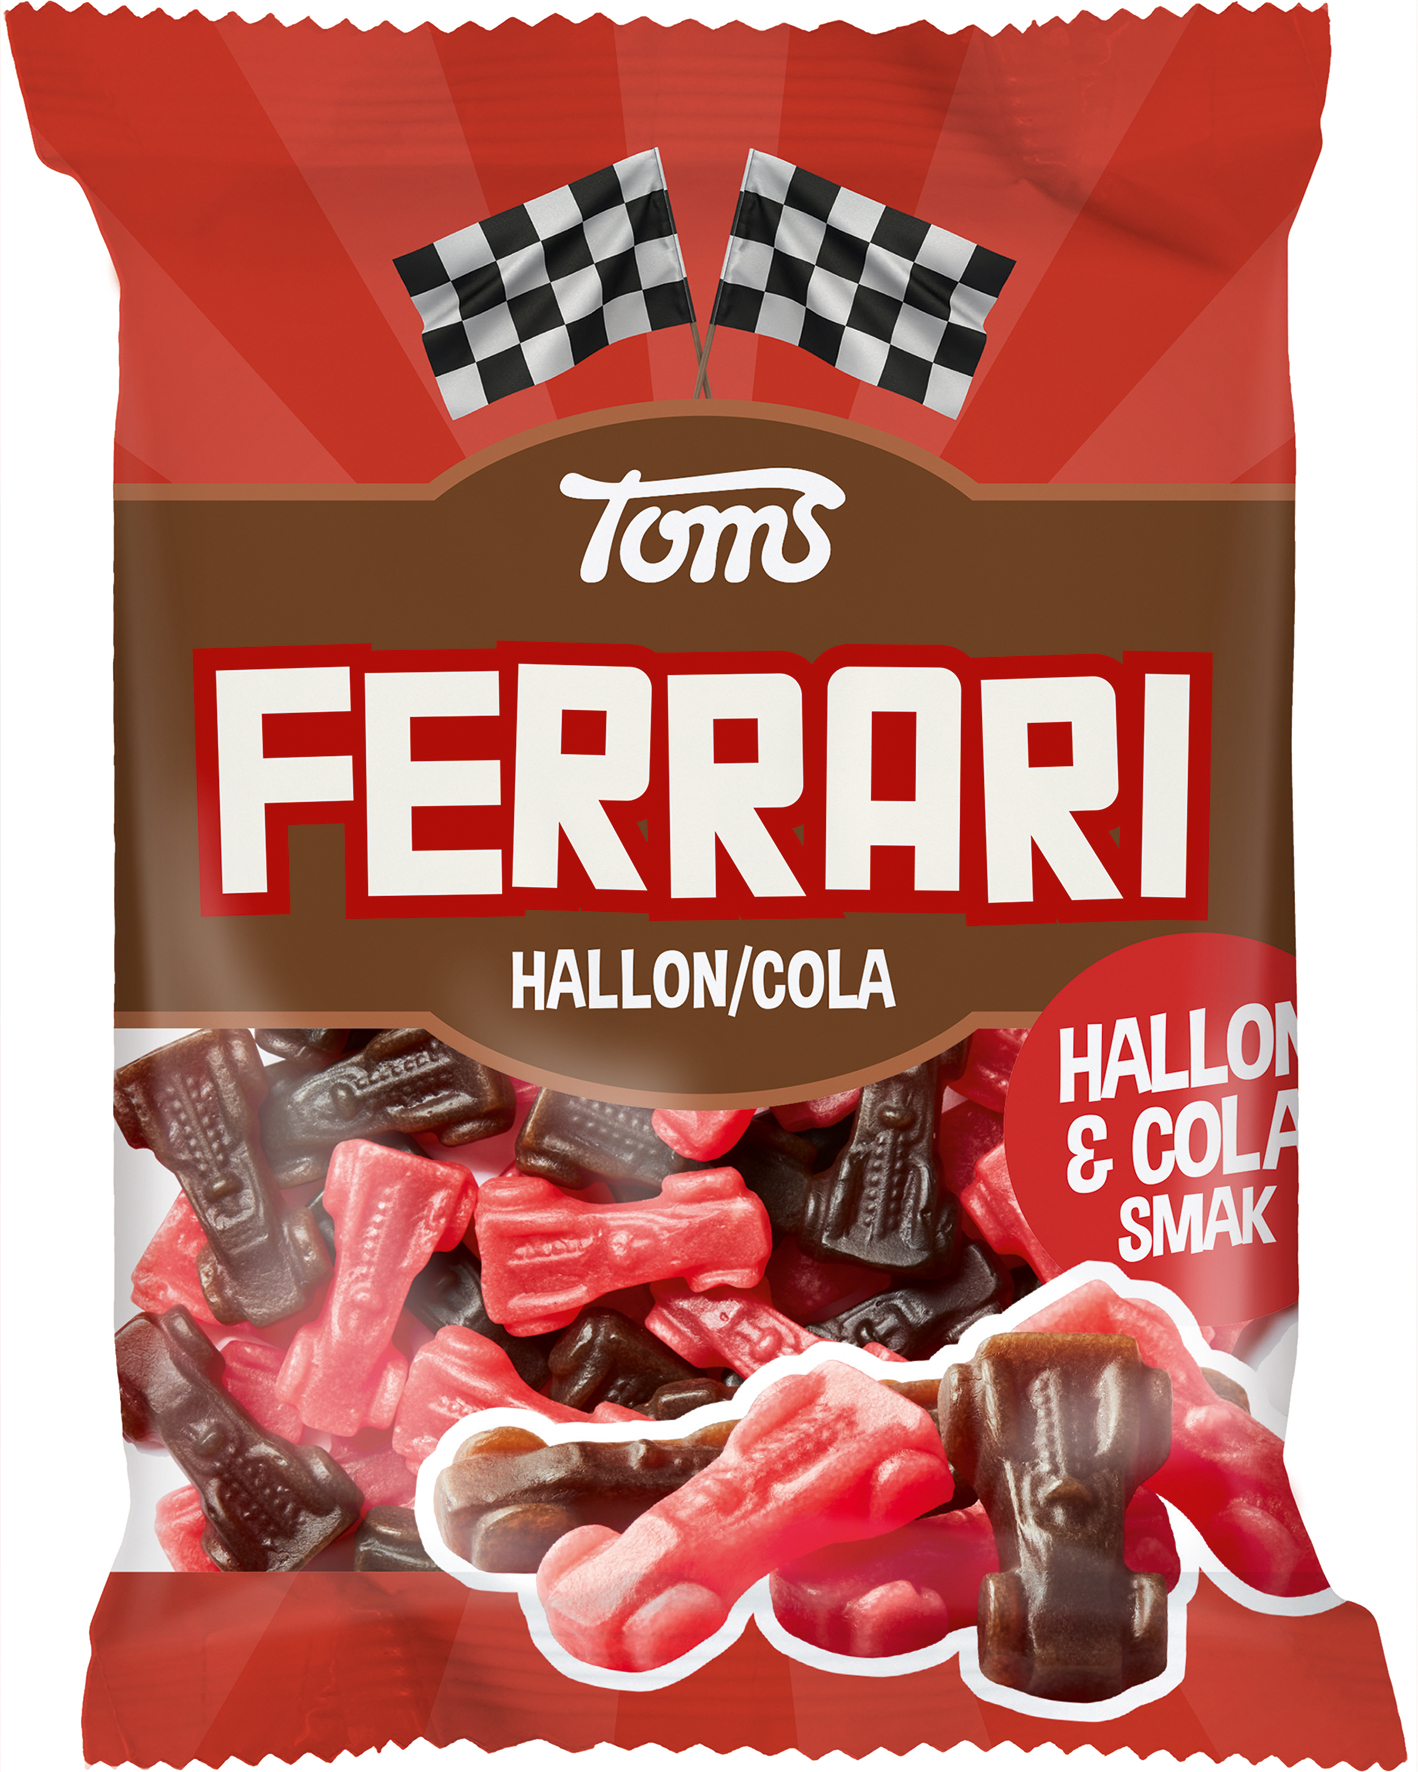 [8552522] Ferrari hallon/cola 275g